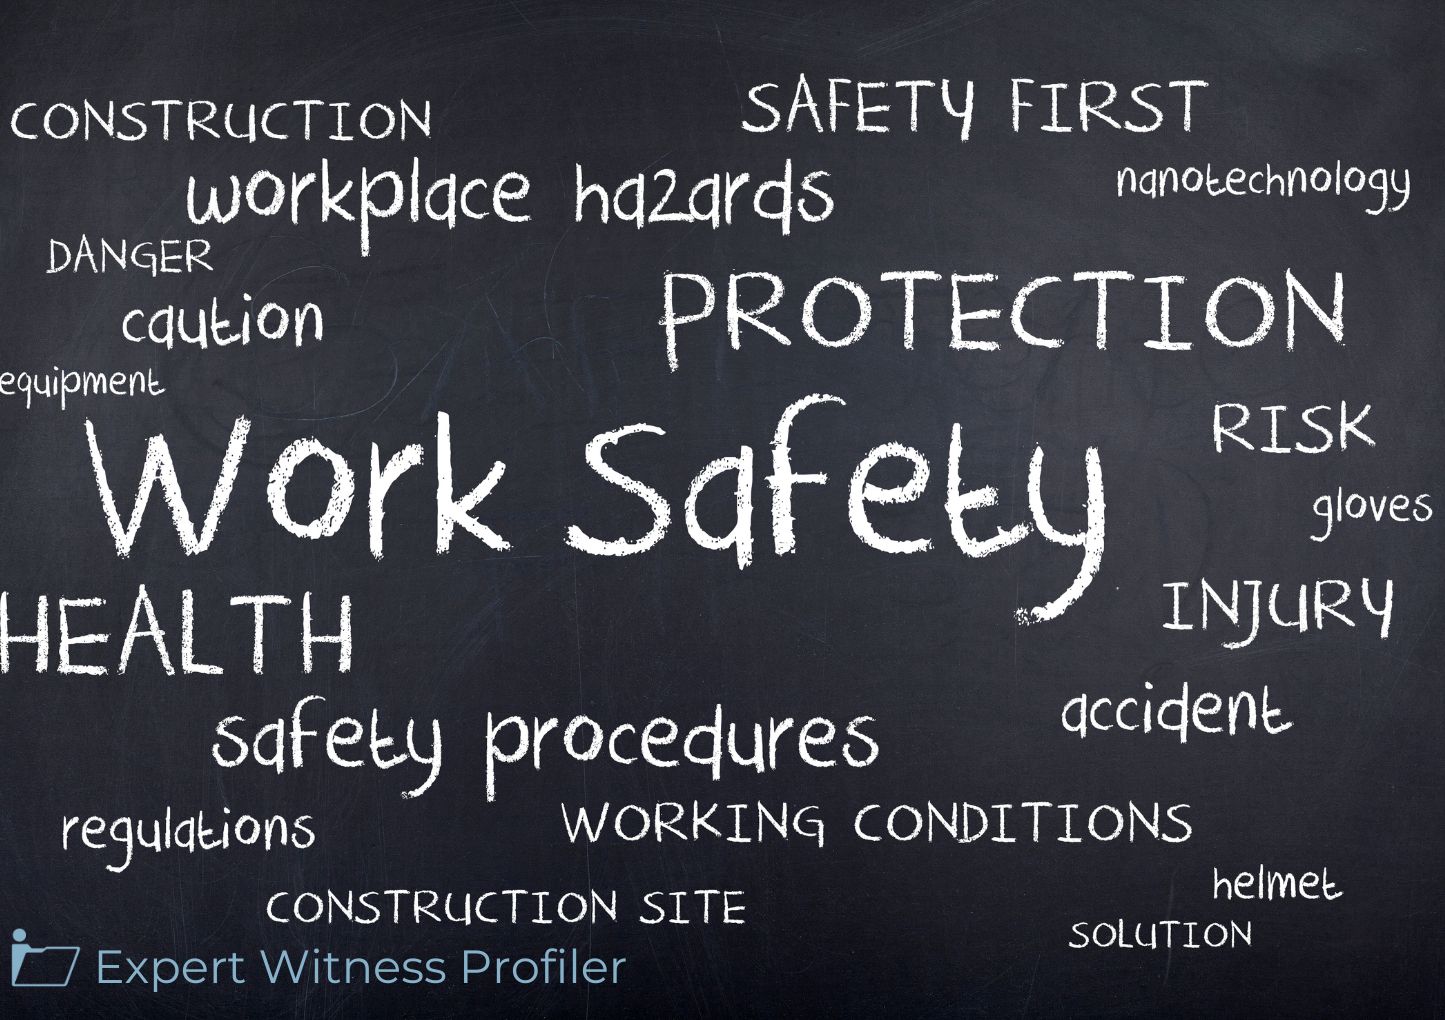 OSHA/Workplace Safety Expert Witness' testimony on alternate repair method admitted